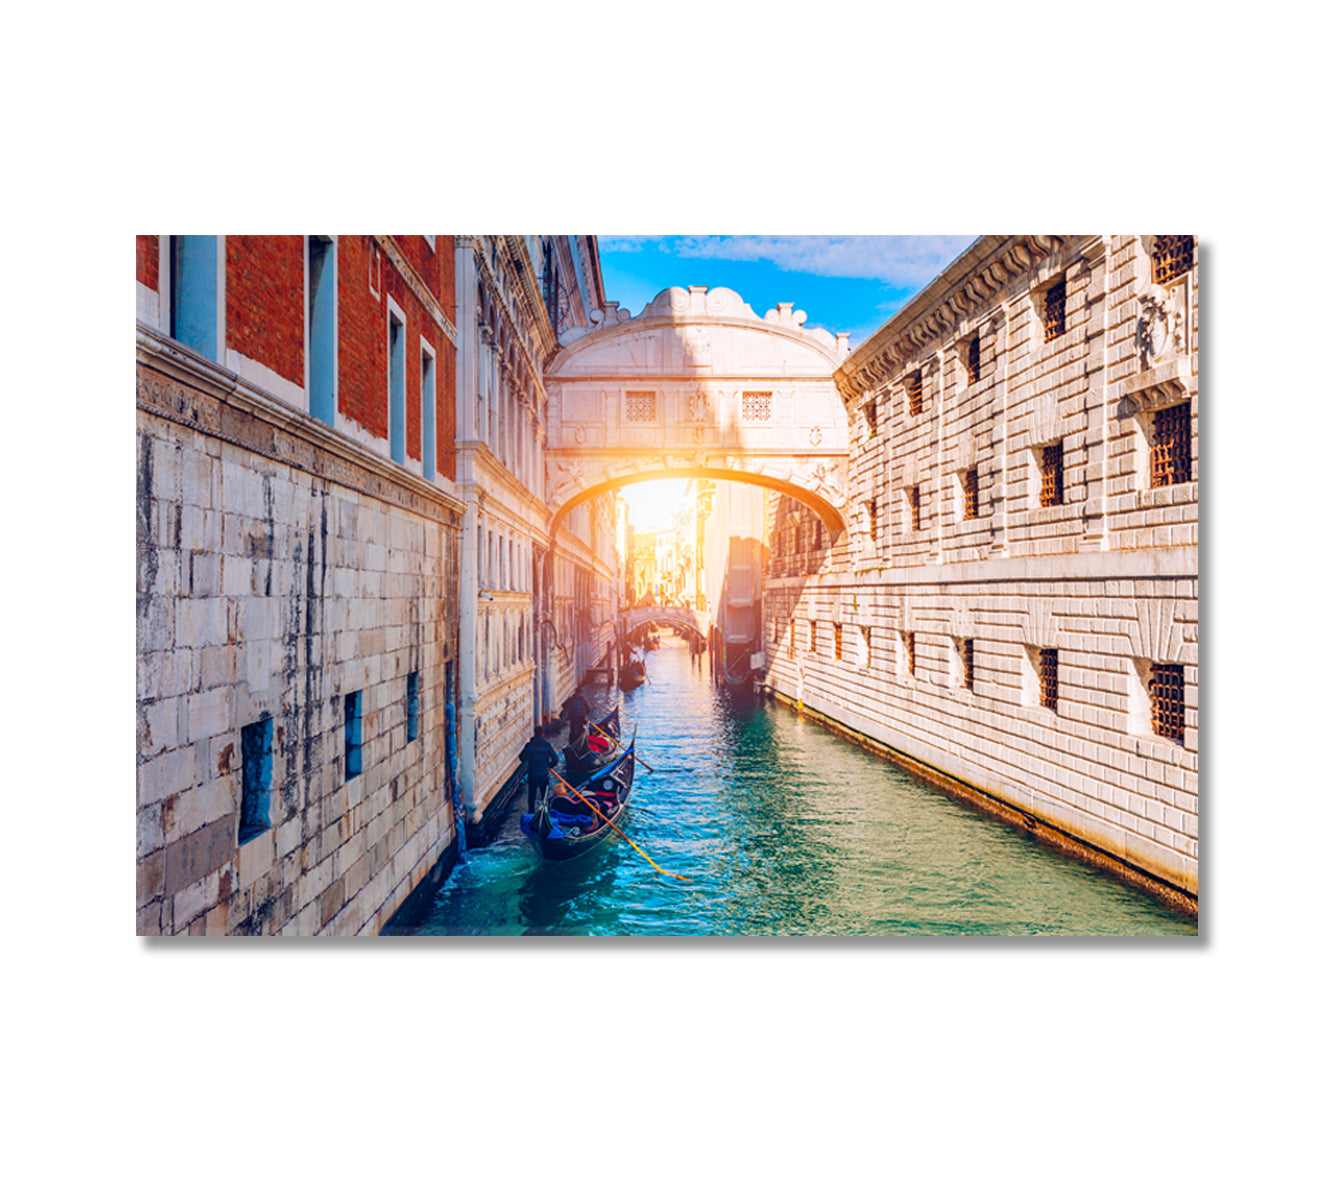 Bridge of Sighs and Rio de Palazzo o de Canonica Canal Venice Italy Canvas Print-Canvas Print-CetArt-1 Panel-24x16 inches-CetArt